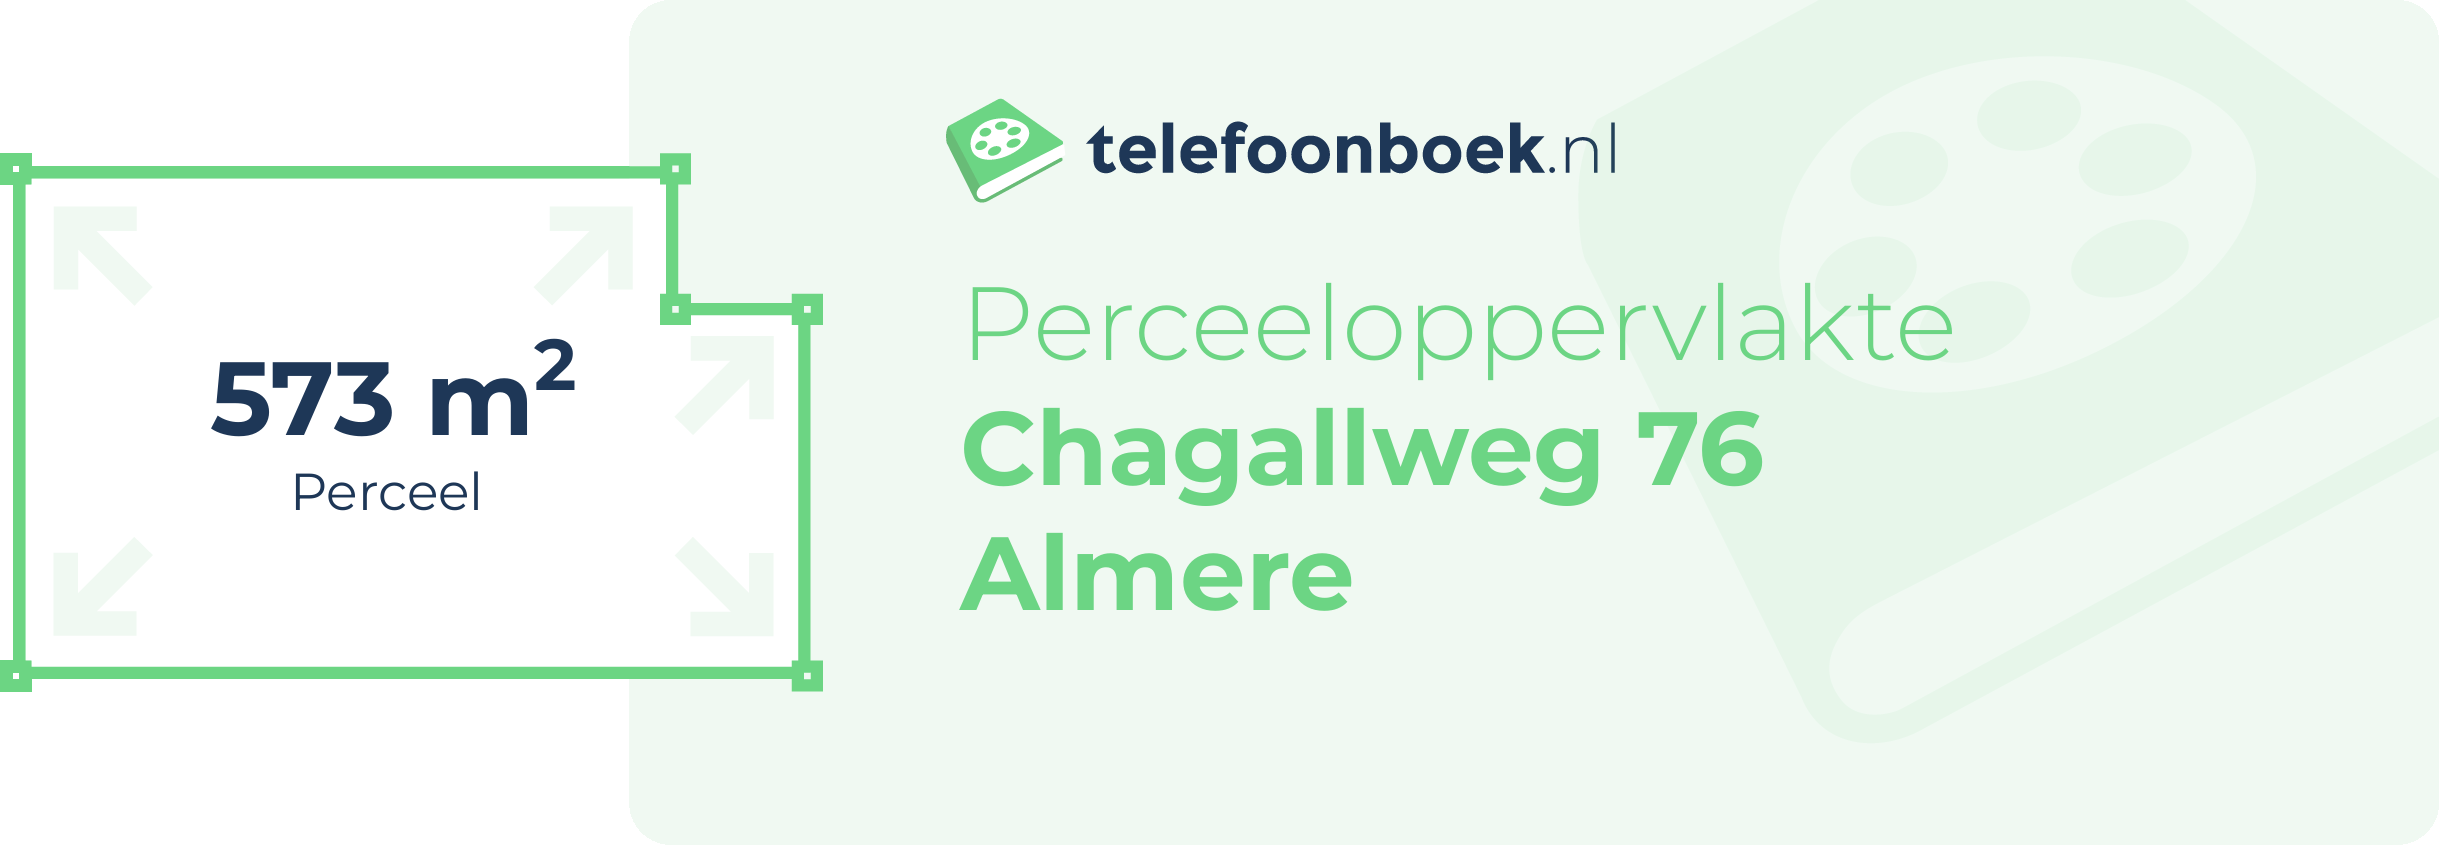 Perceeloppervlakte Chagallweg 76 Almere